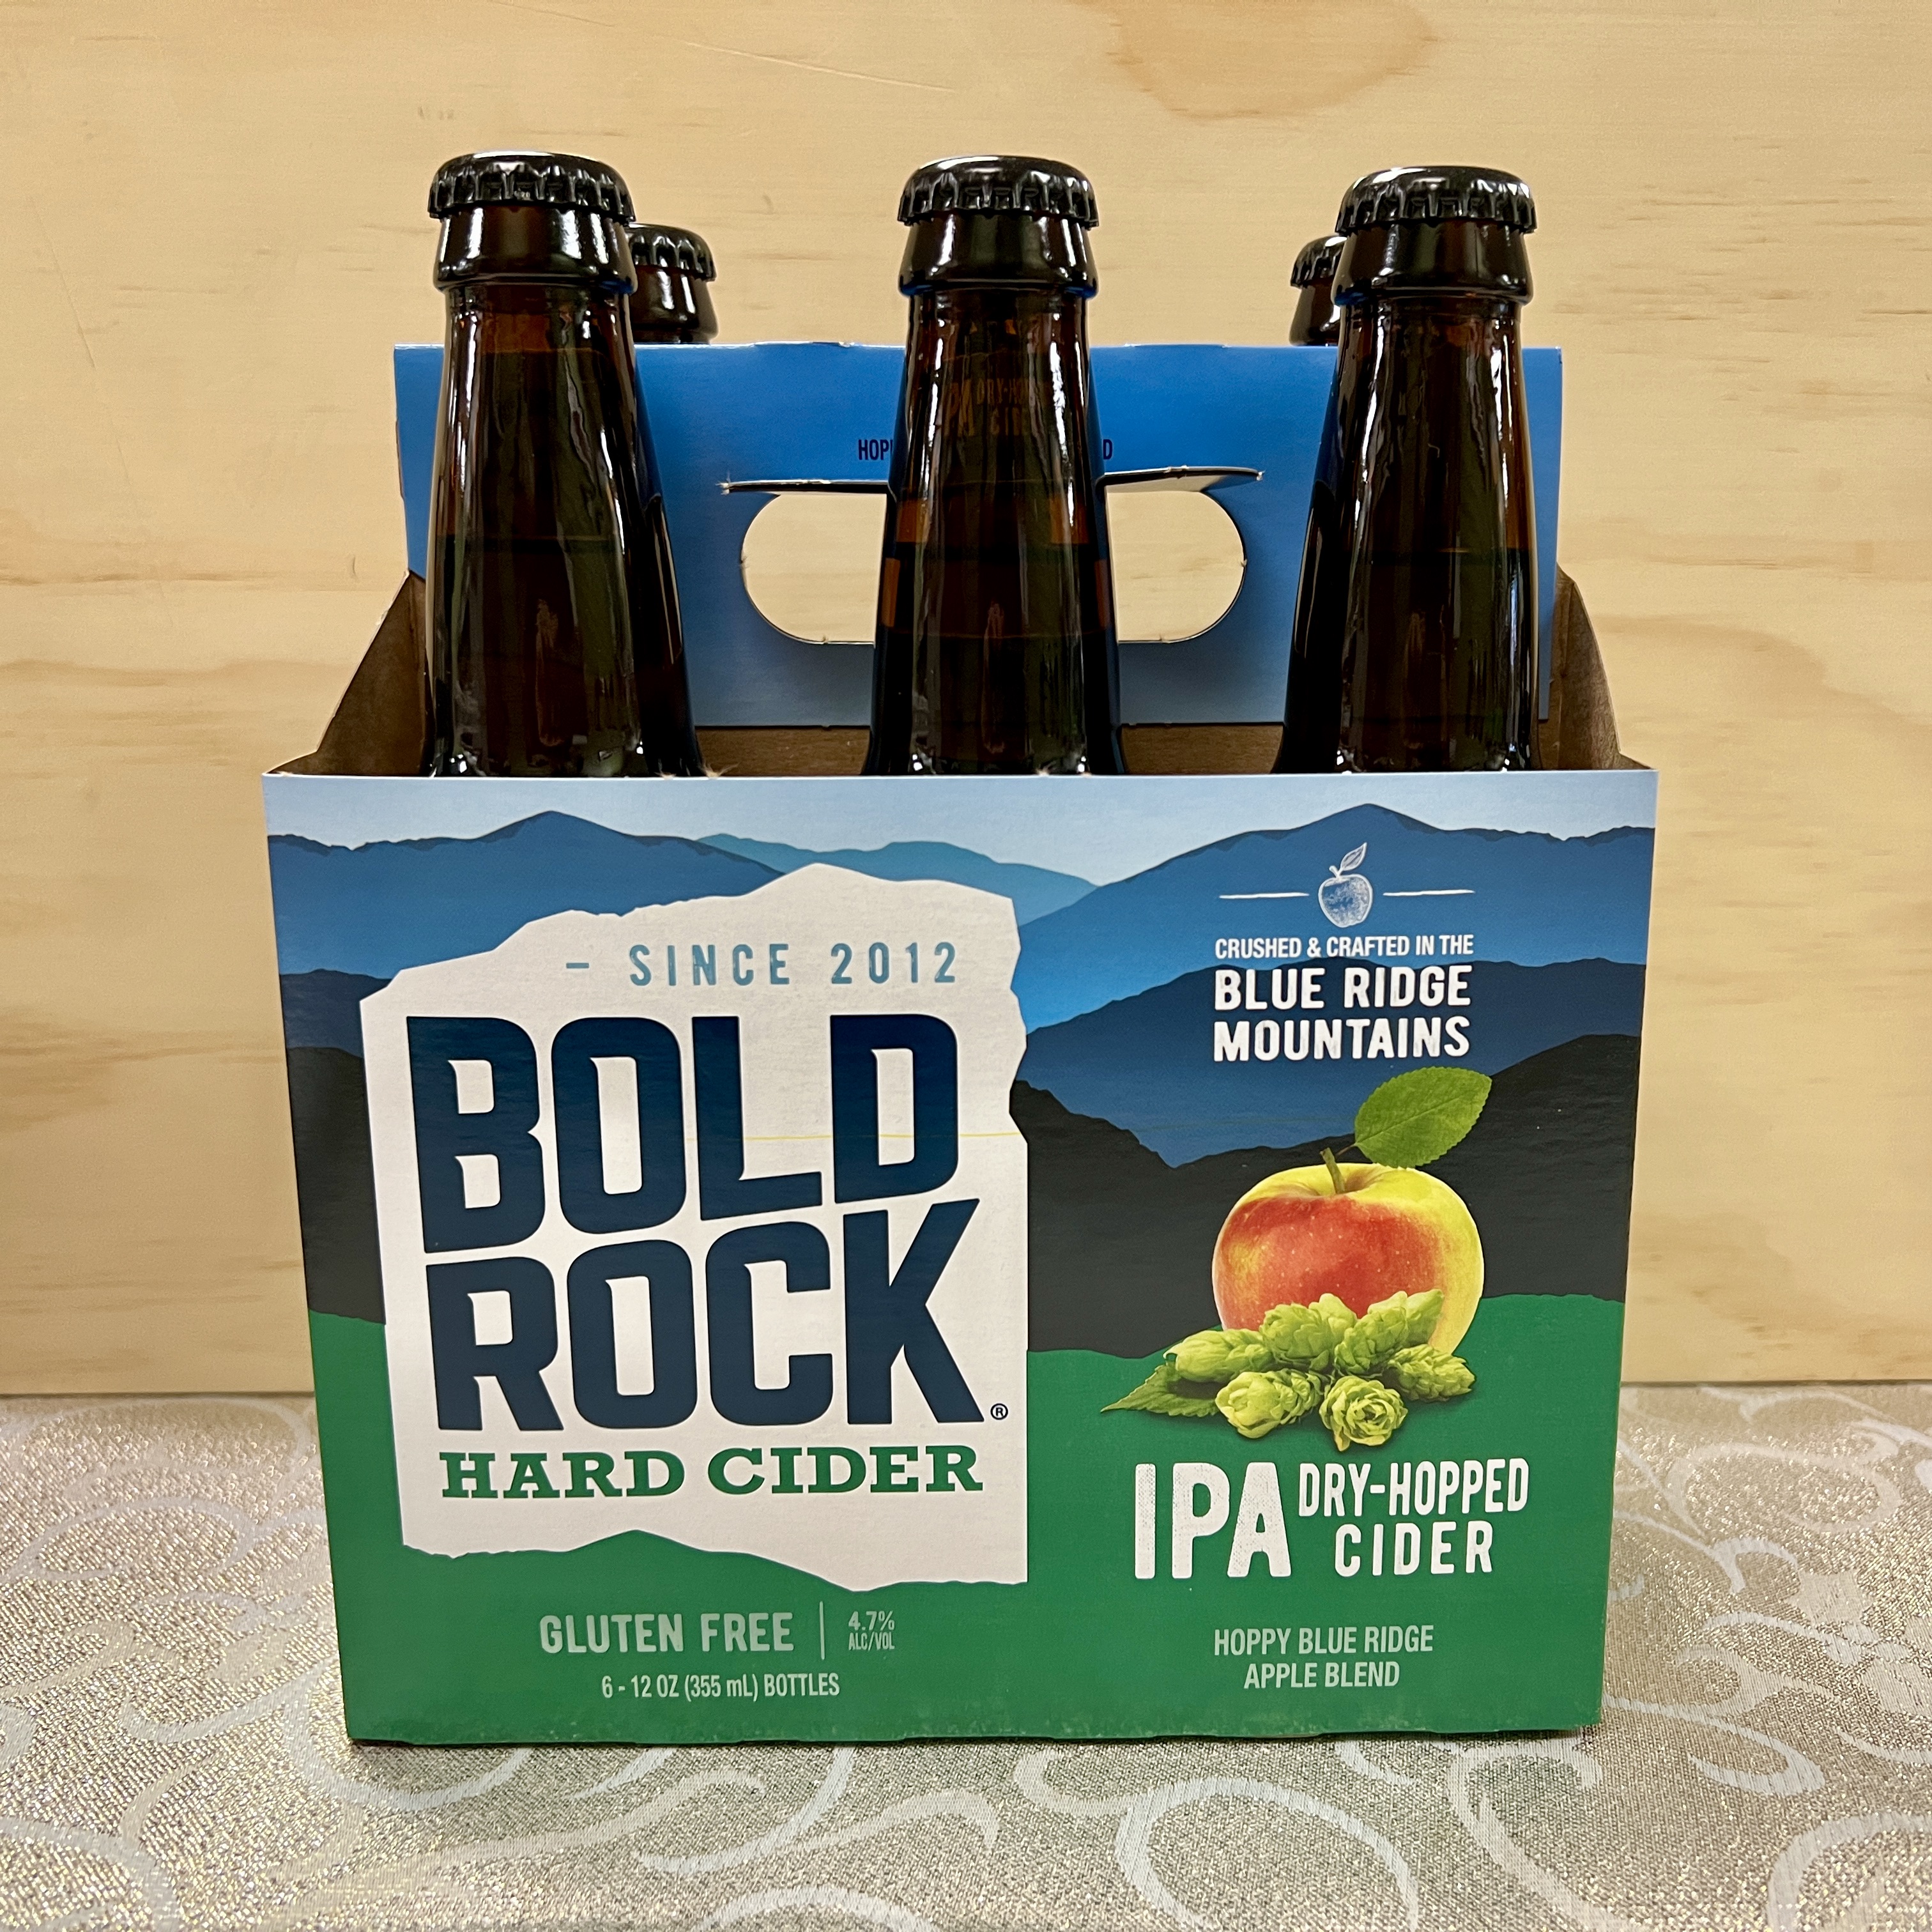 Bold Rock IPA Dry-hopped Cider 6 x 12oz bottles